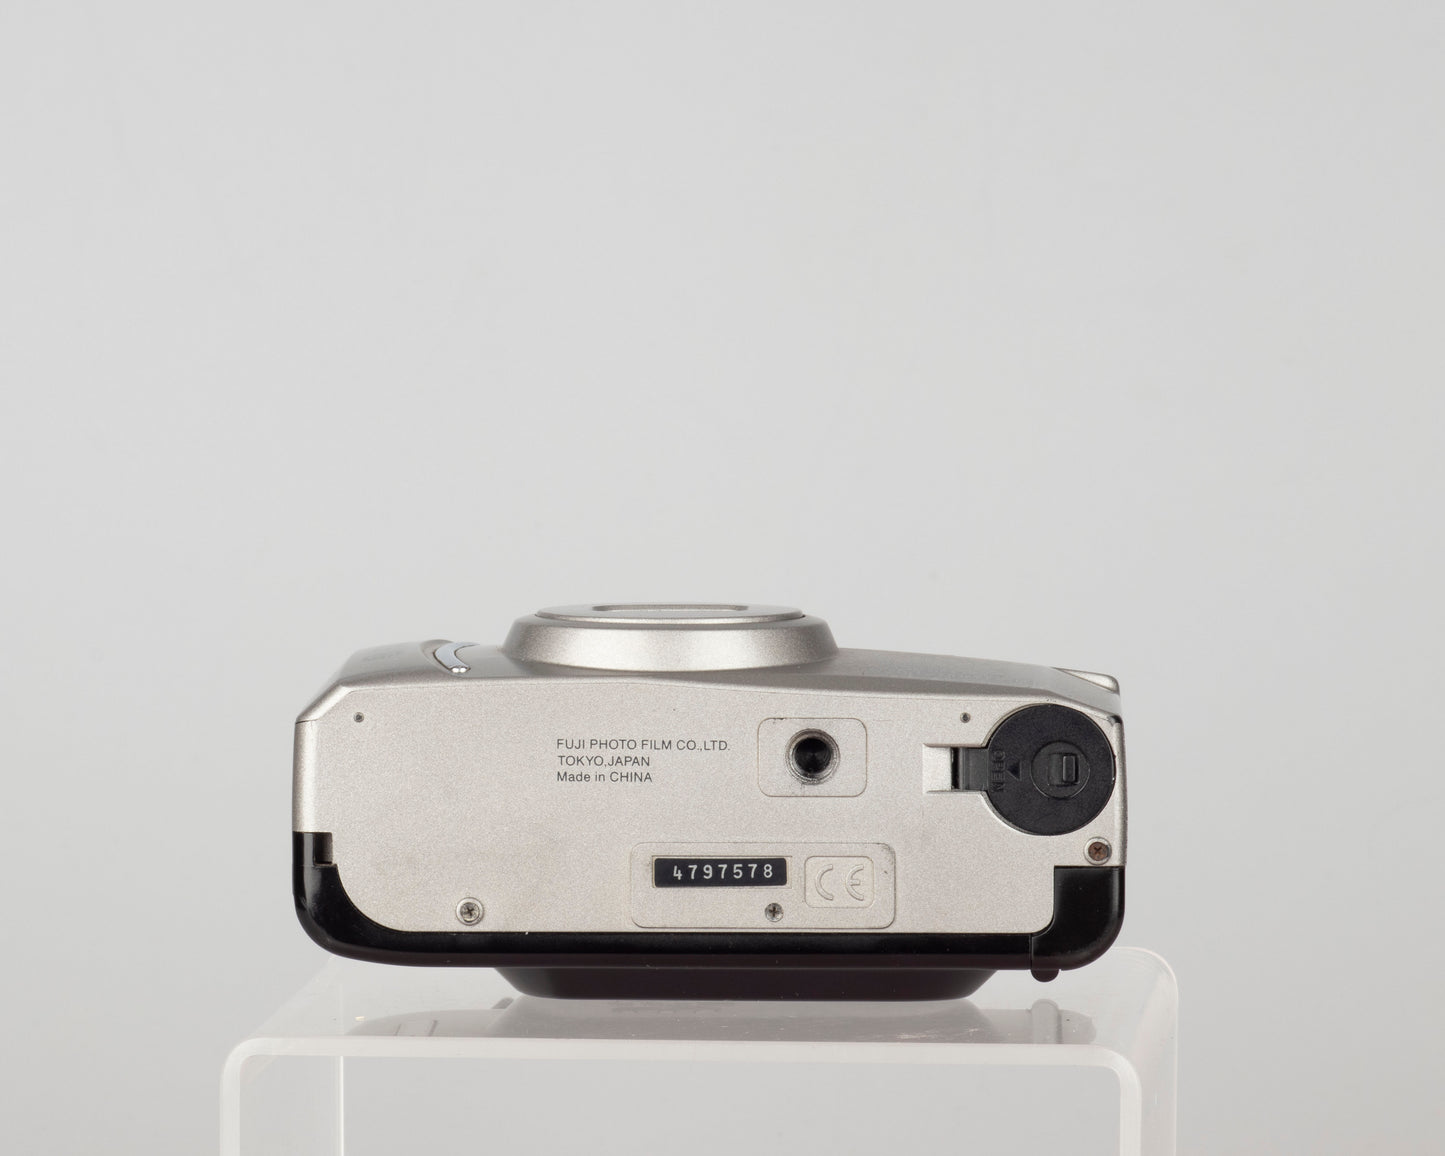 Appareil photo Fujifilm Discovery 700S Zoom Date 35 mm (série 4797578)